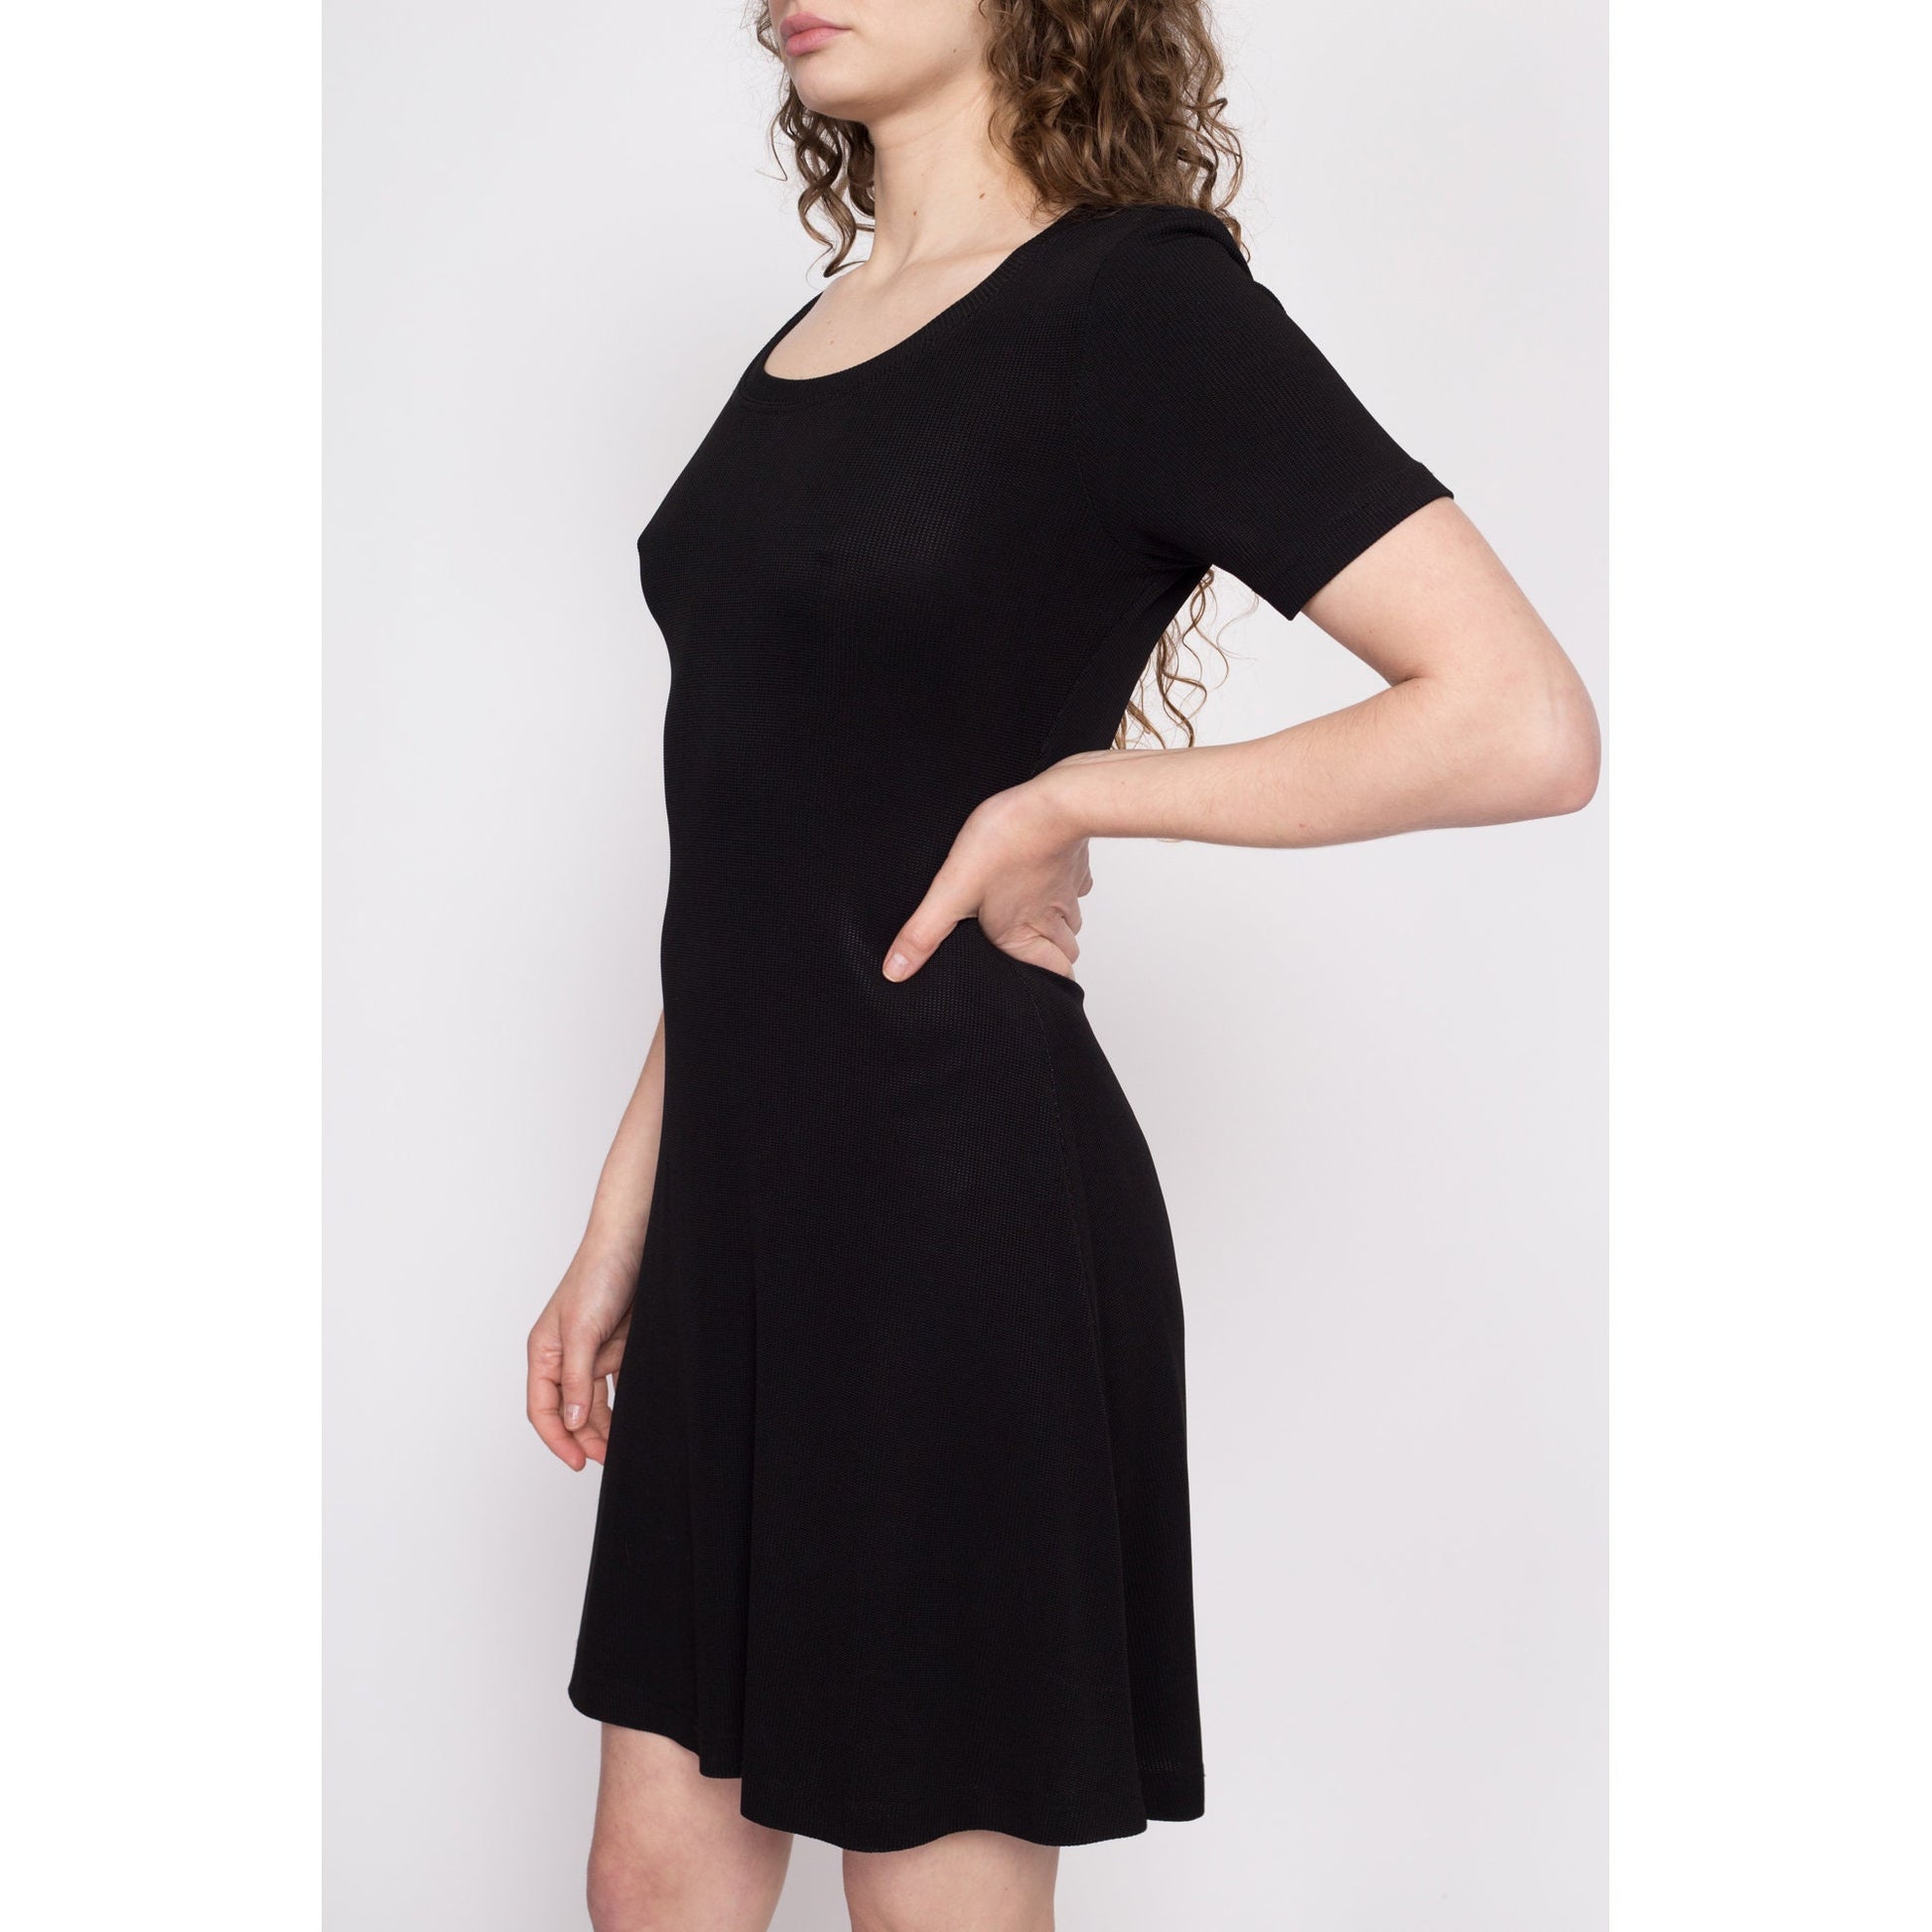 90s Black Scoop Neck Slinky Mini Dress - Small to Medium | Vintage Minimalist Short Sleeve Stretchy Grunge Dress